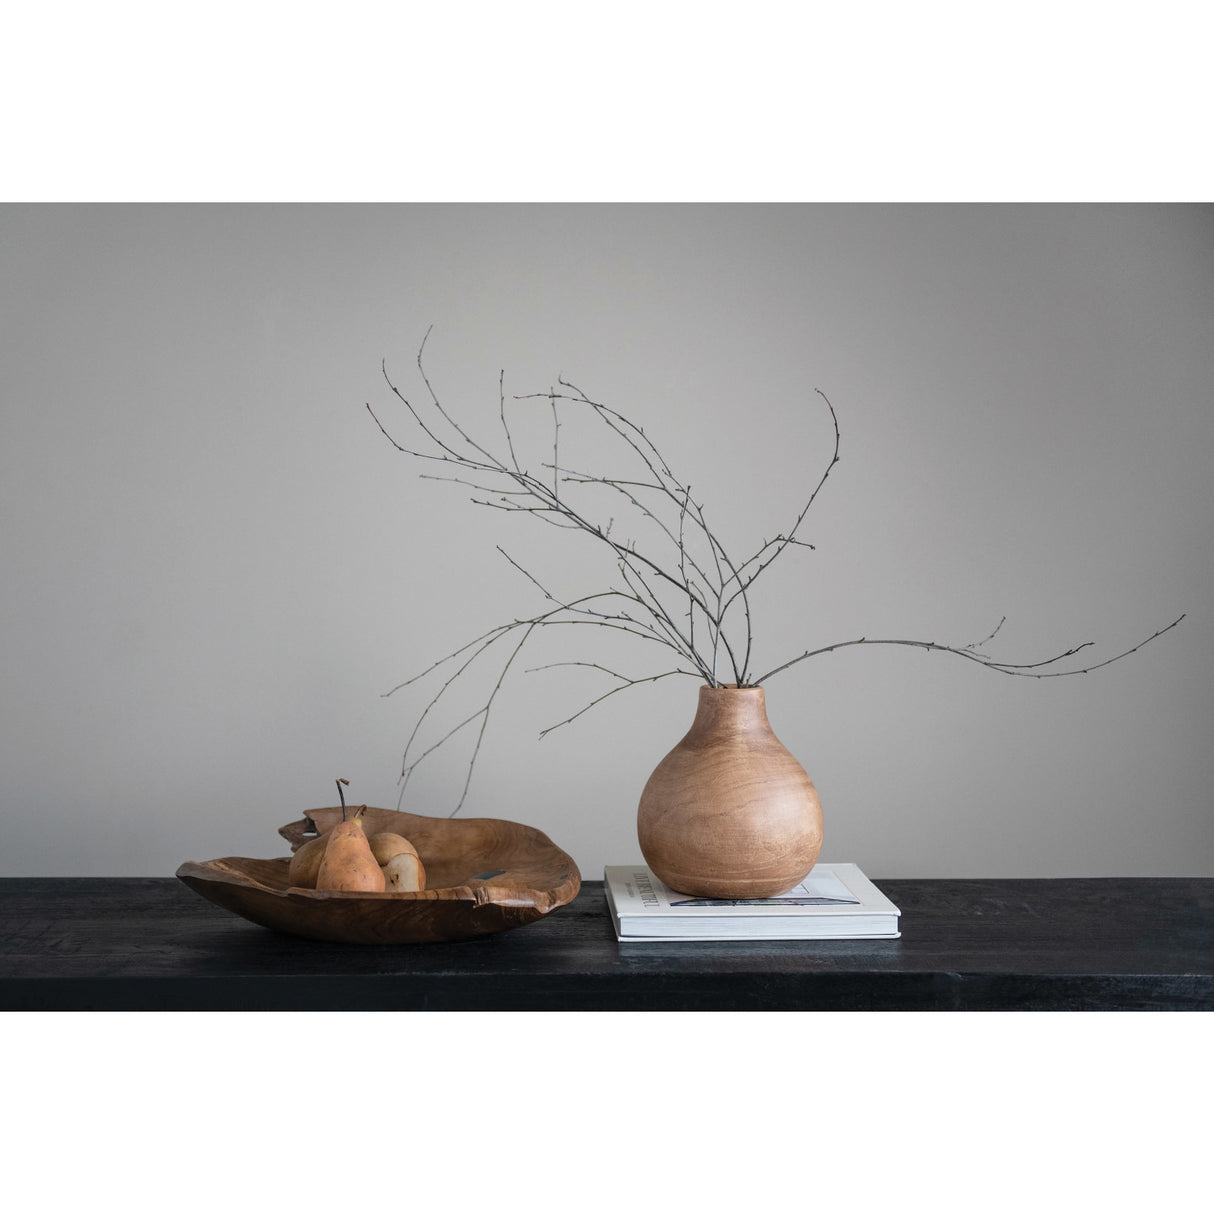 Decorative Teak Wood Oblong Bowl